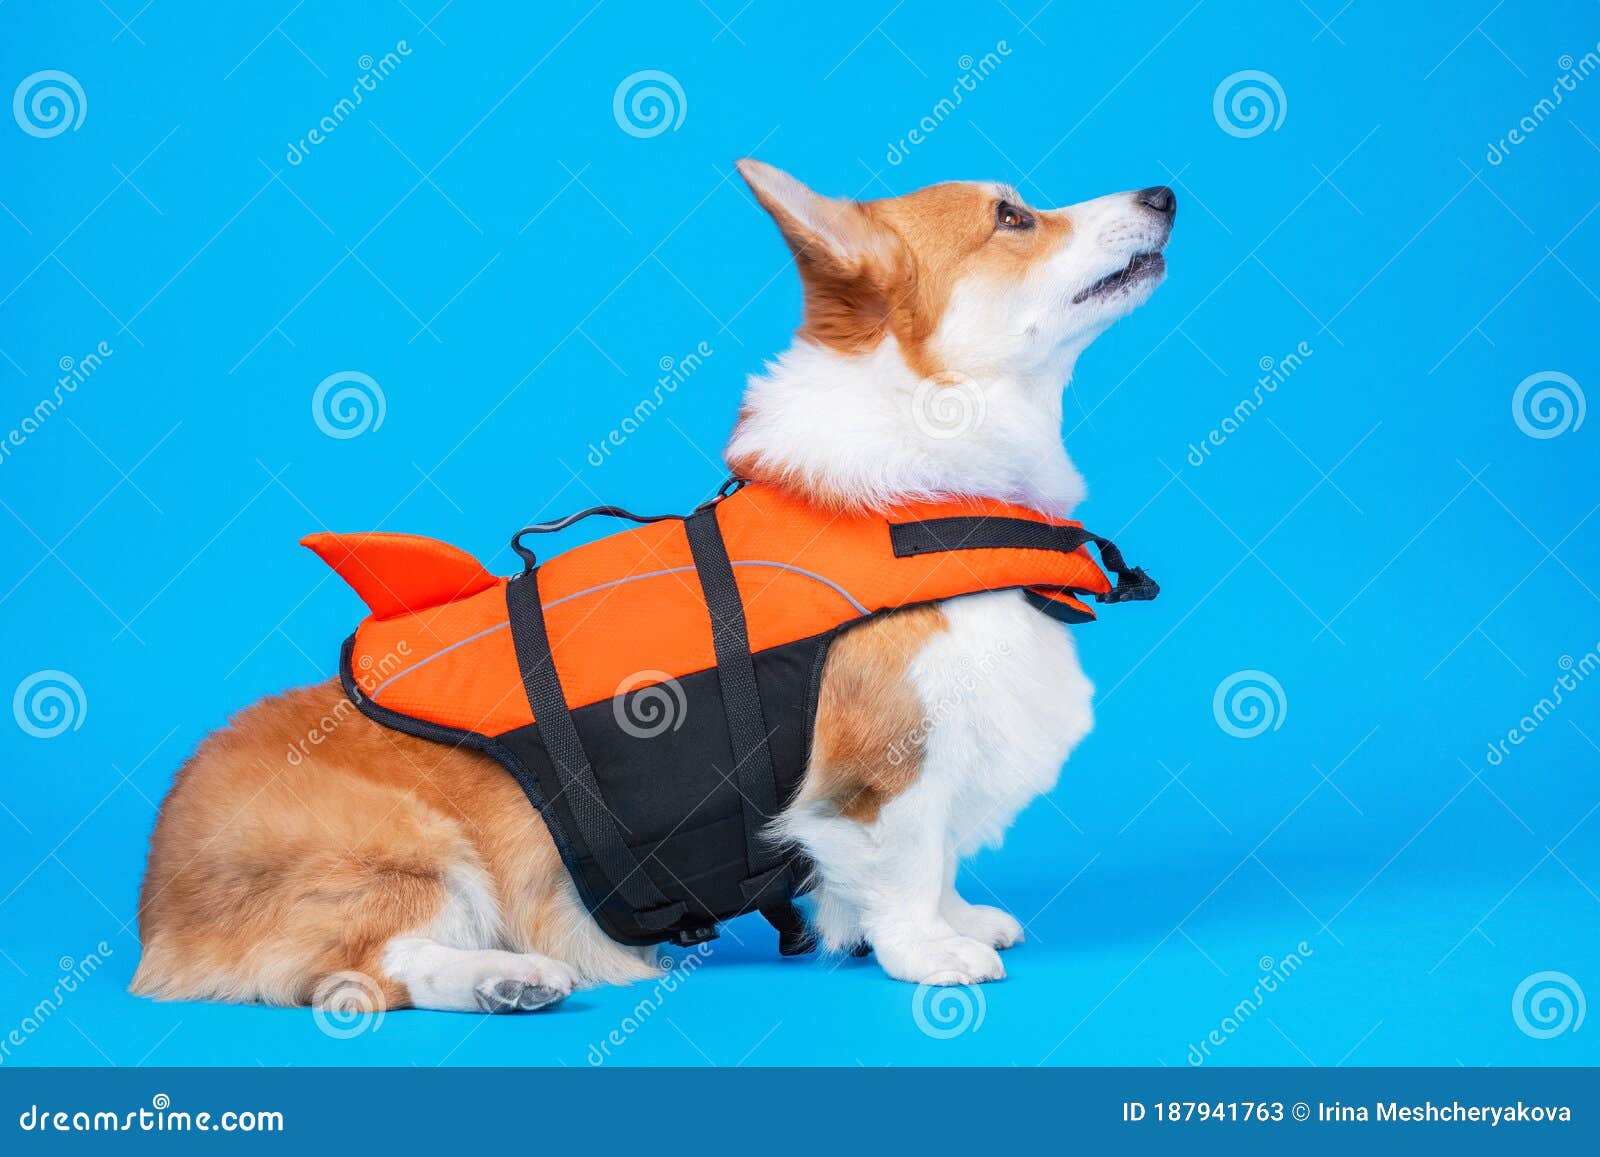 corgi life jacket